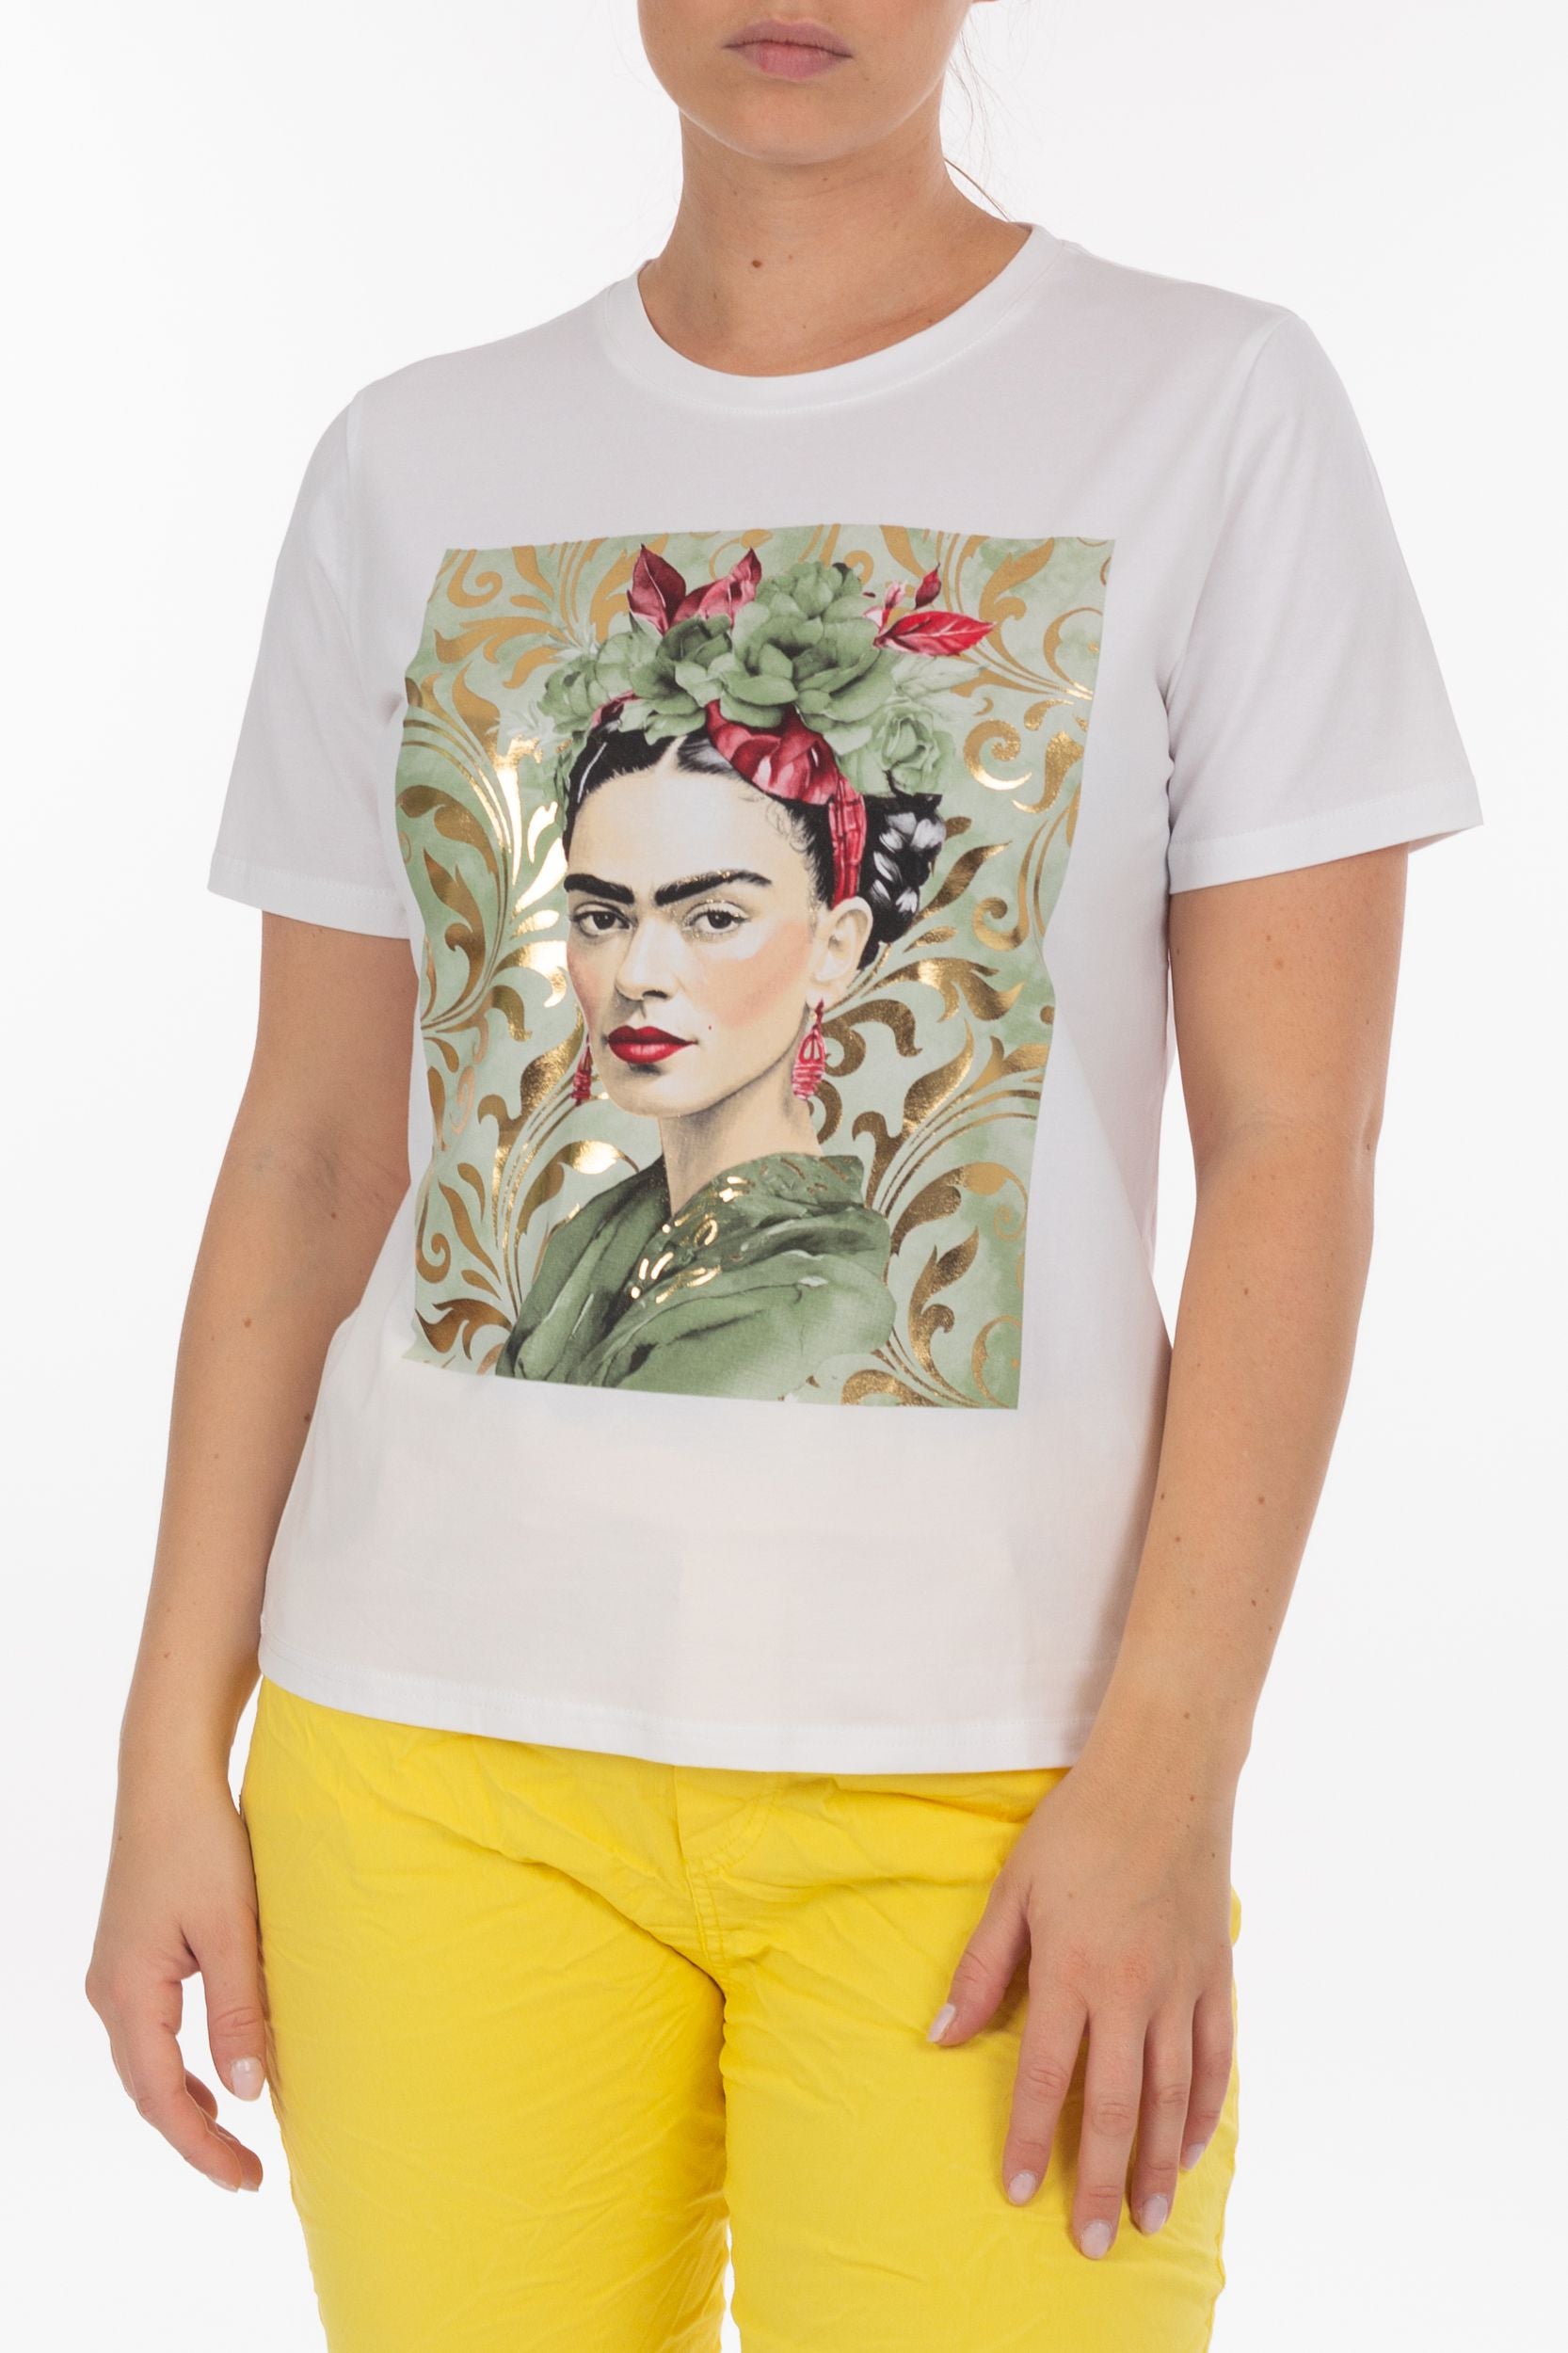 T-shirt con Frida Kahlo